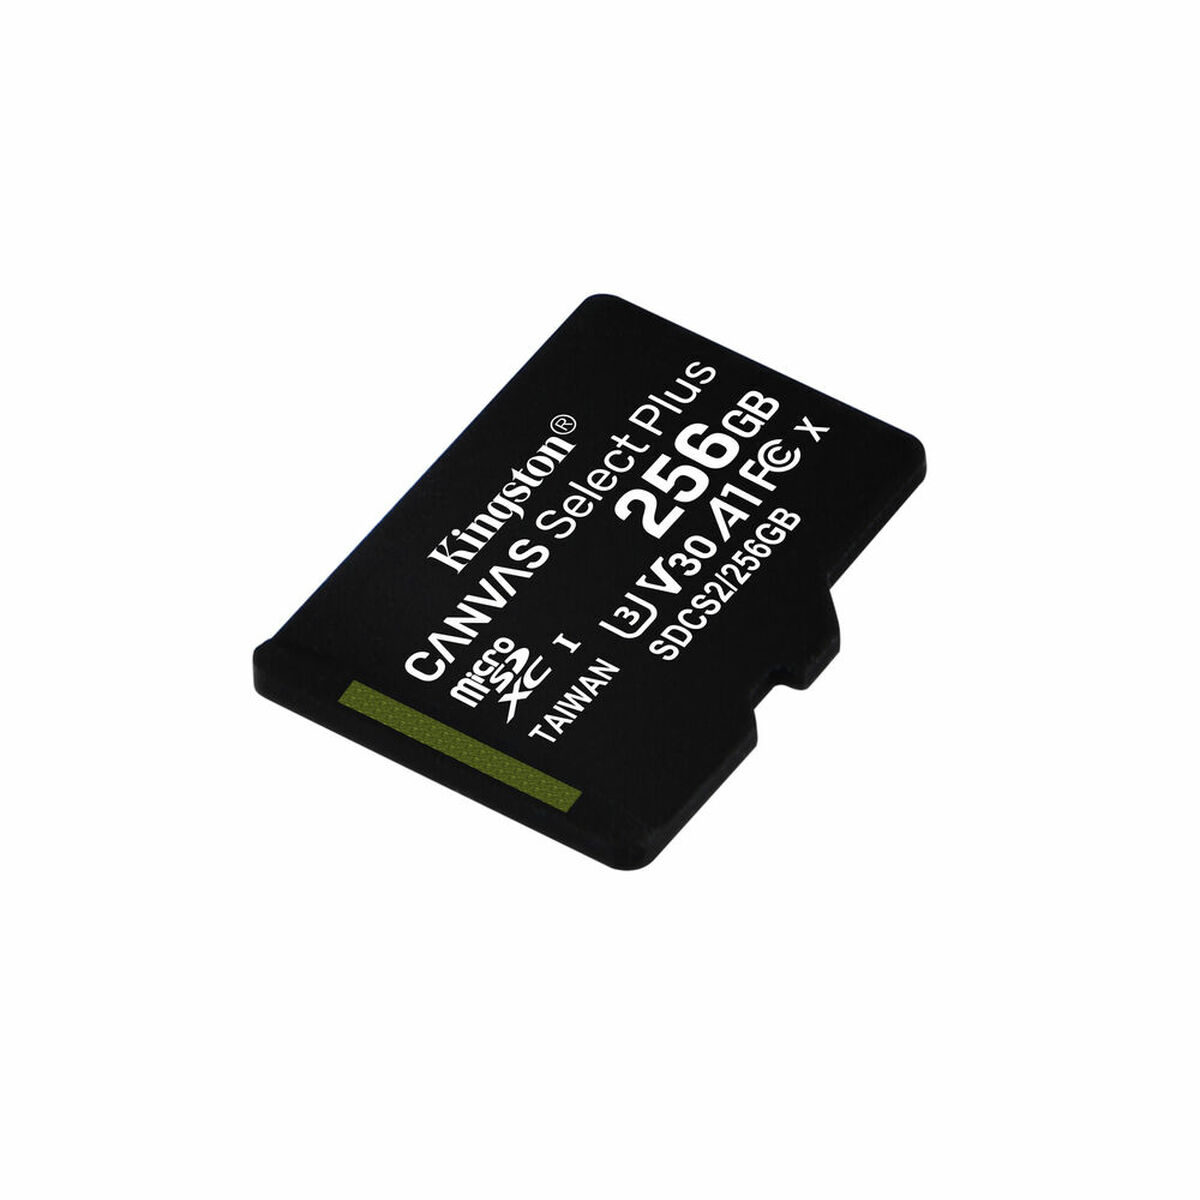 KINGSTON SDCS2/256GBSP, GB Speicherkarte, Micro-SD 256